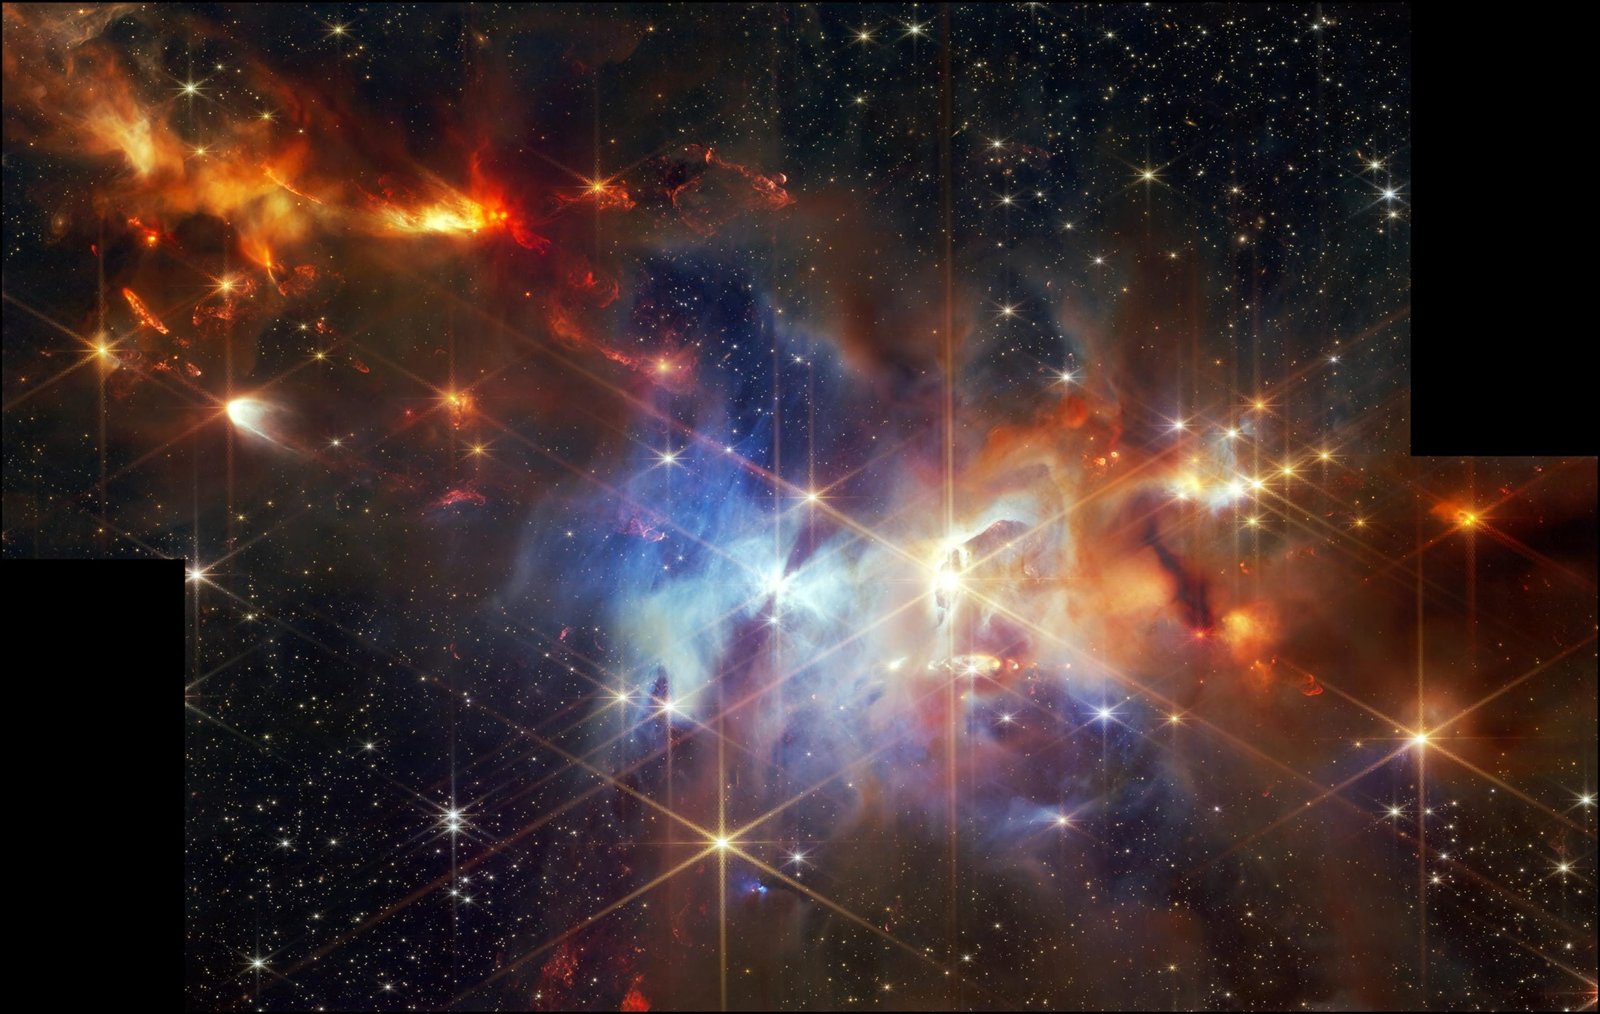 Webb Telescope Reveals Stunning Stellar Jets in Serpens Nebula